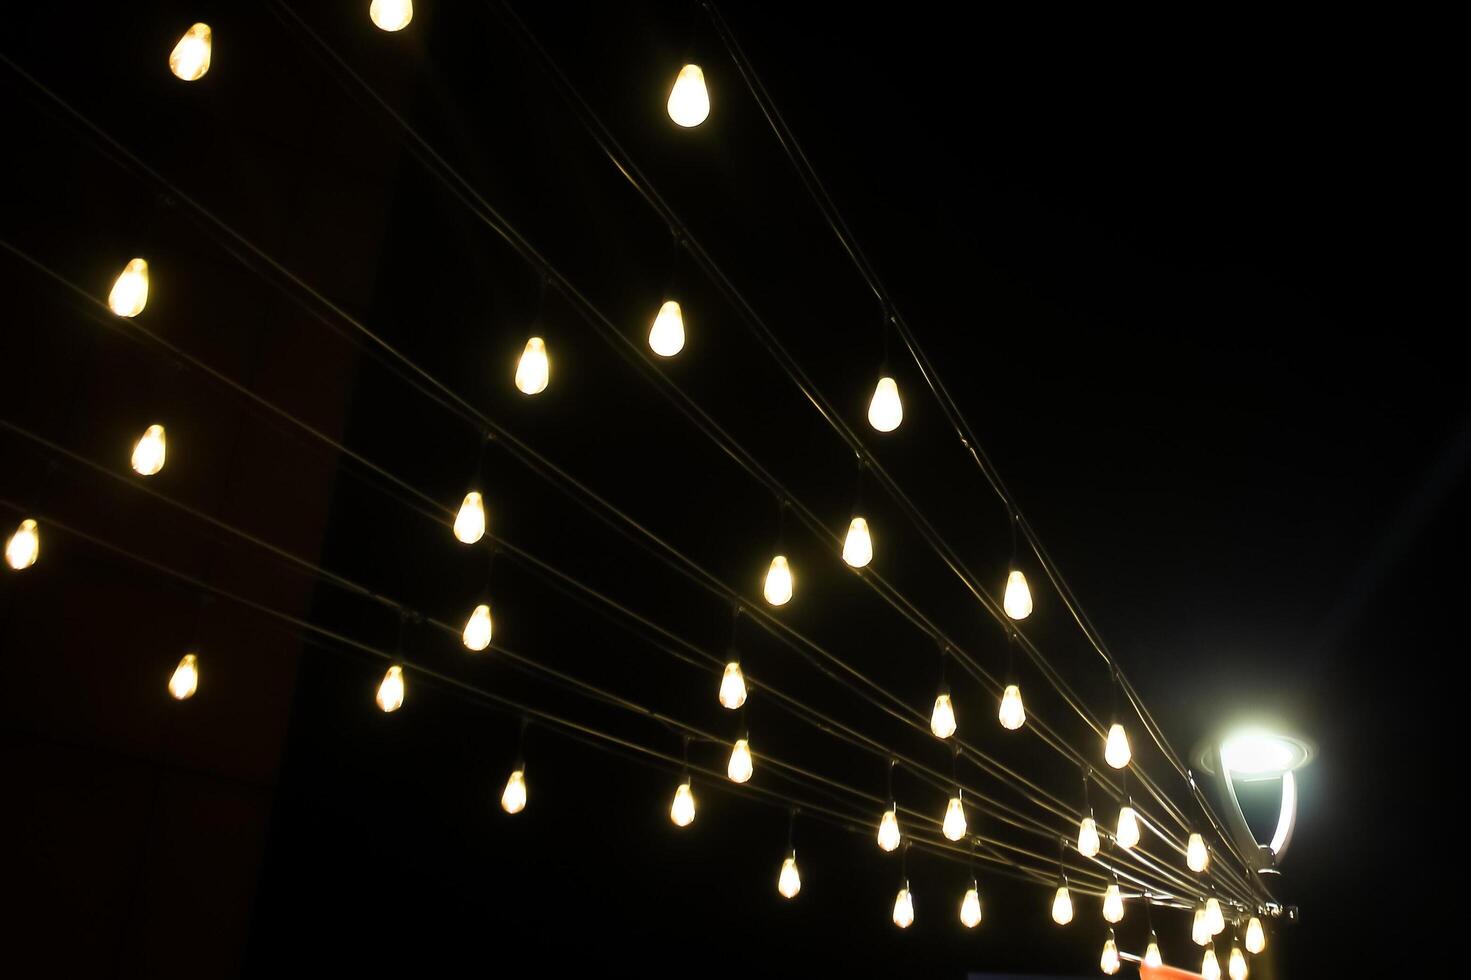 Street lights form patterns at night photo